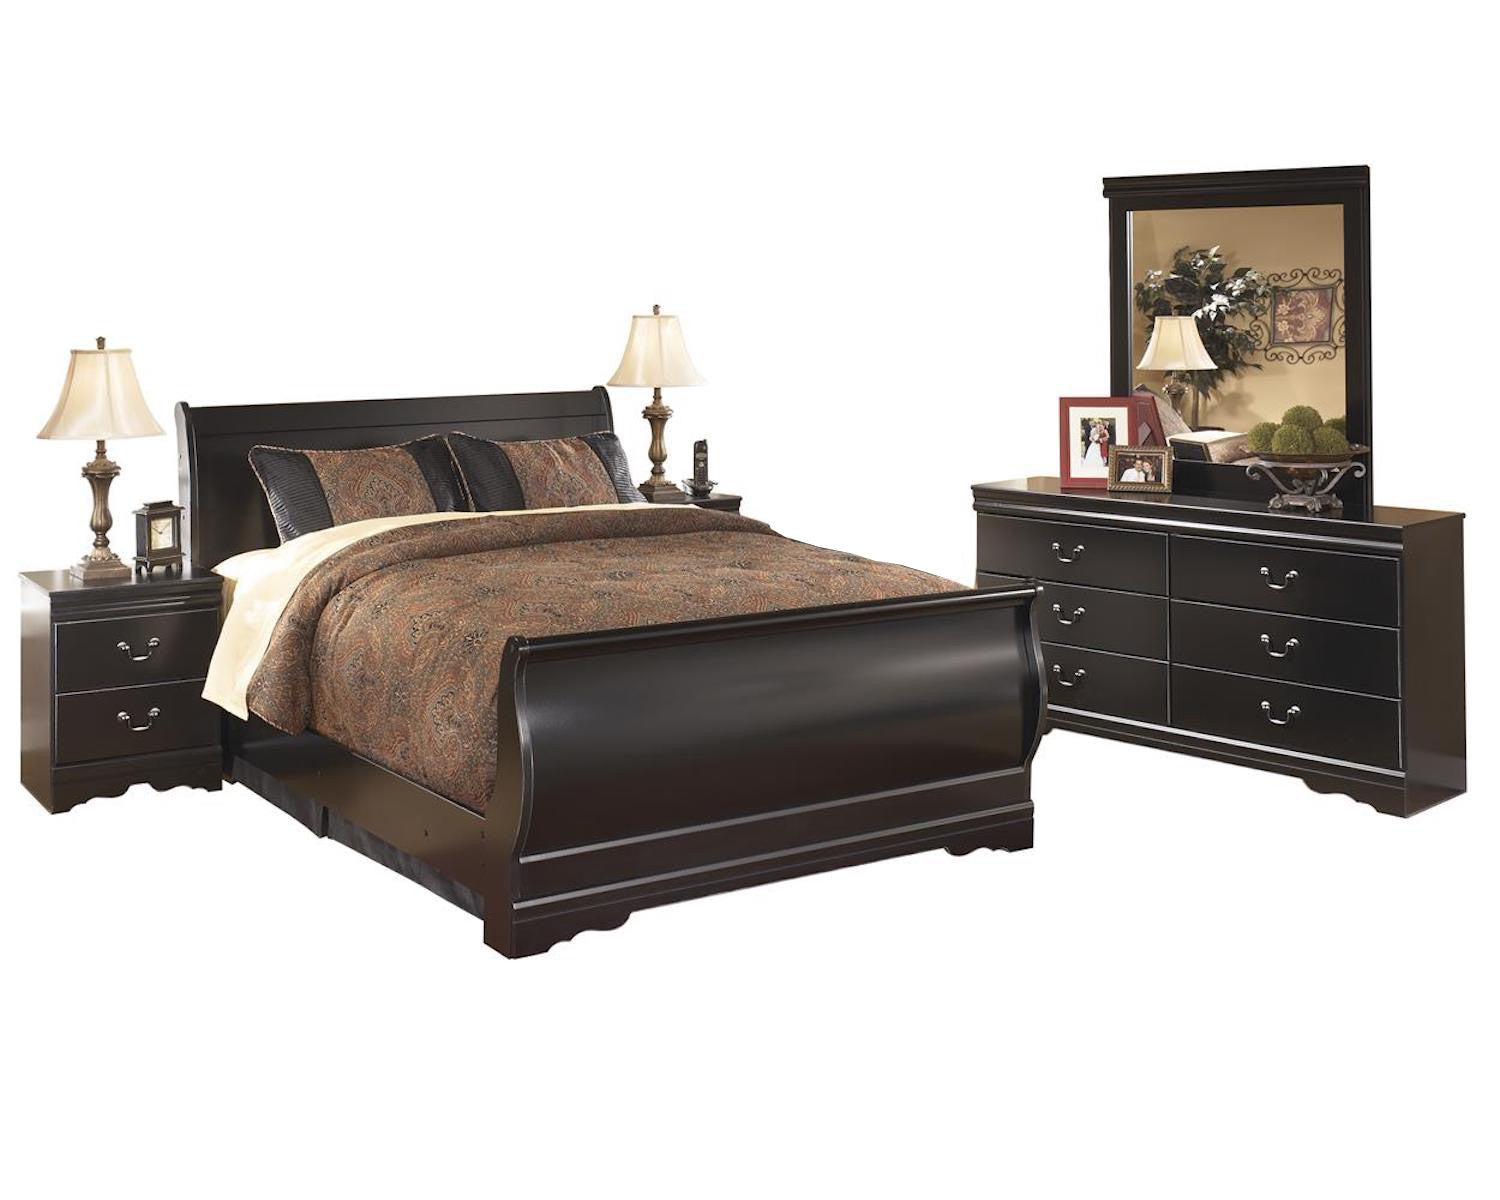 Ashley Huey Vineyard 5PC Queen Sleigh Bed Bedroom Set with two Nightstands in Black